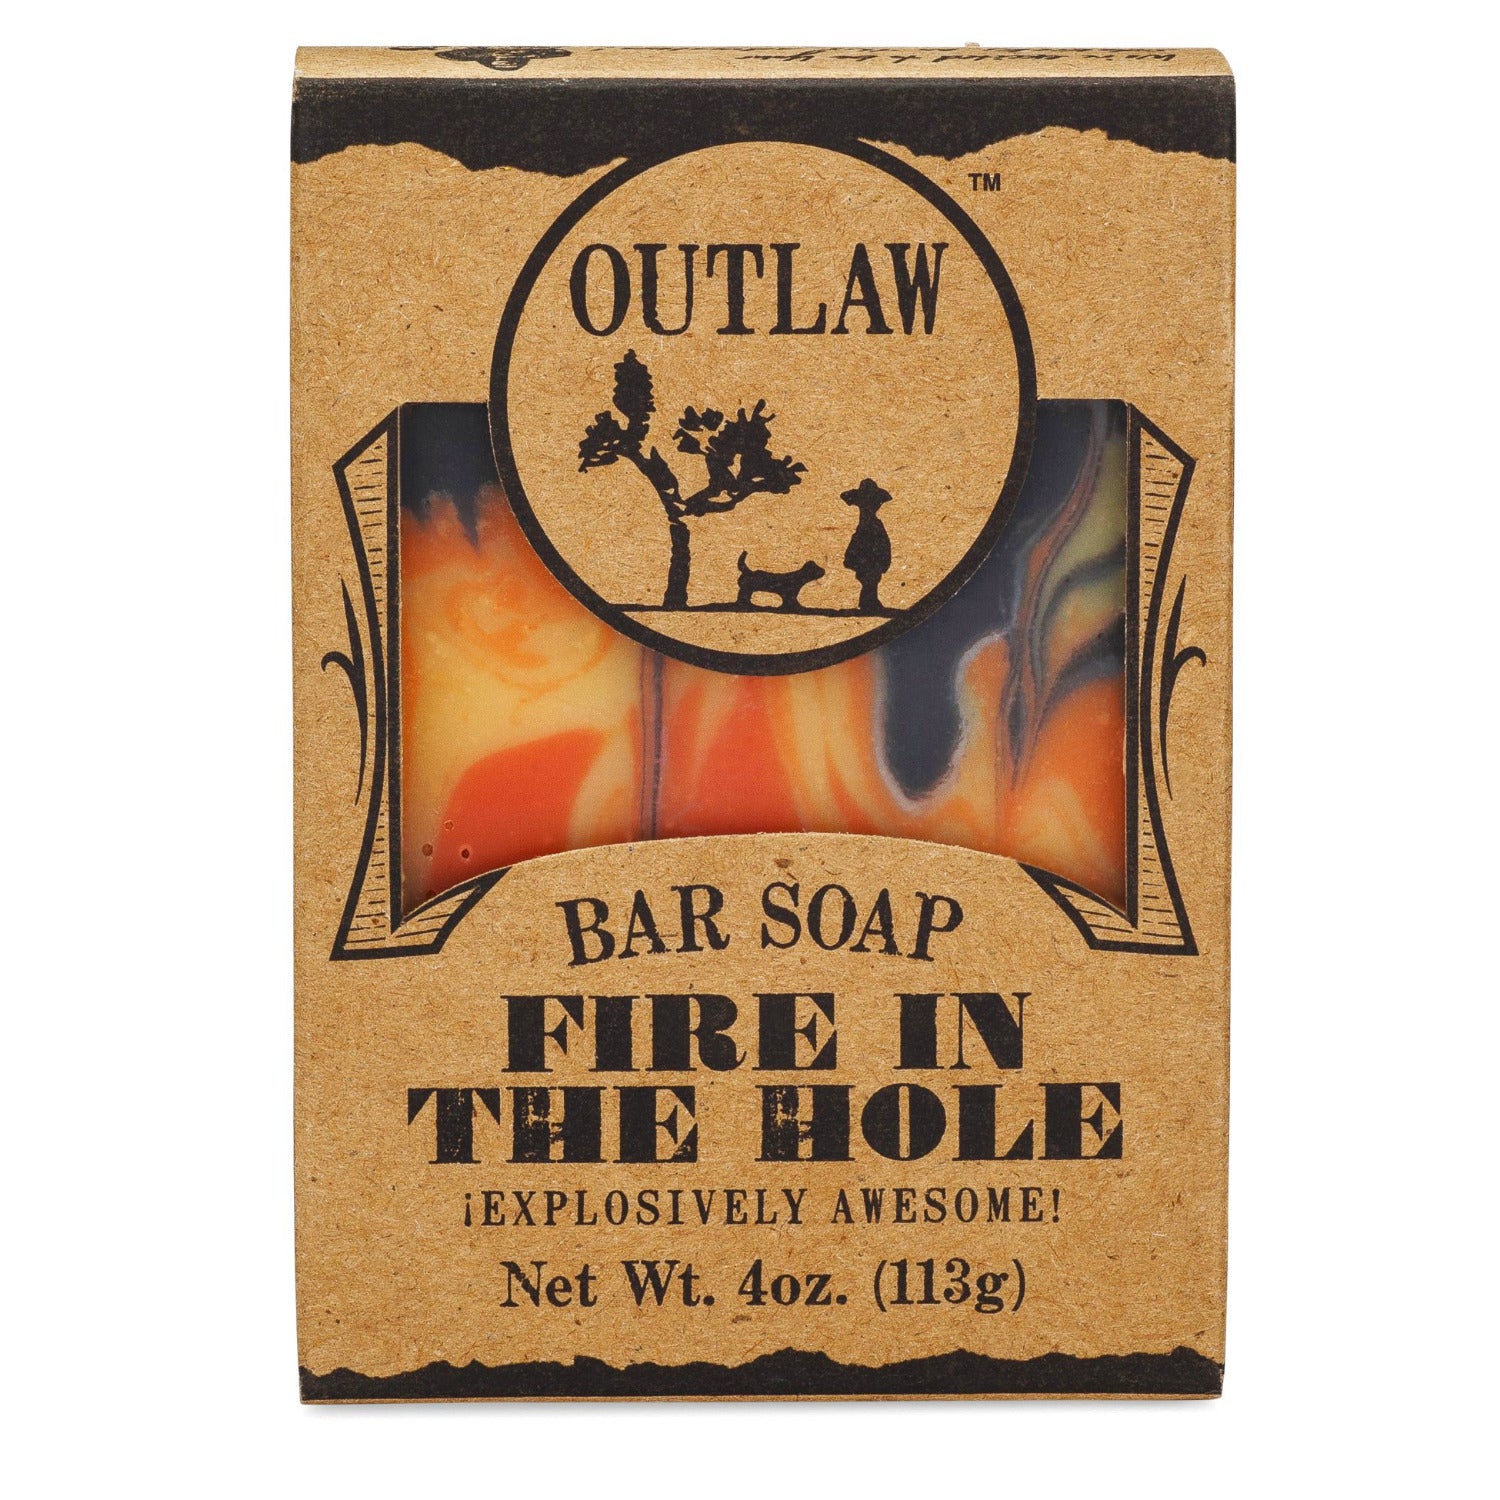 Soap Dudes Soap Co. - Natural Handmade Soap for Men & Women